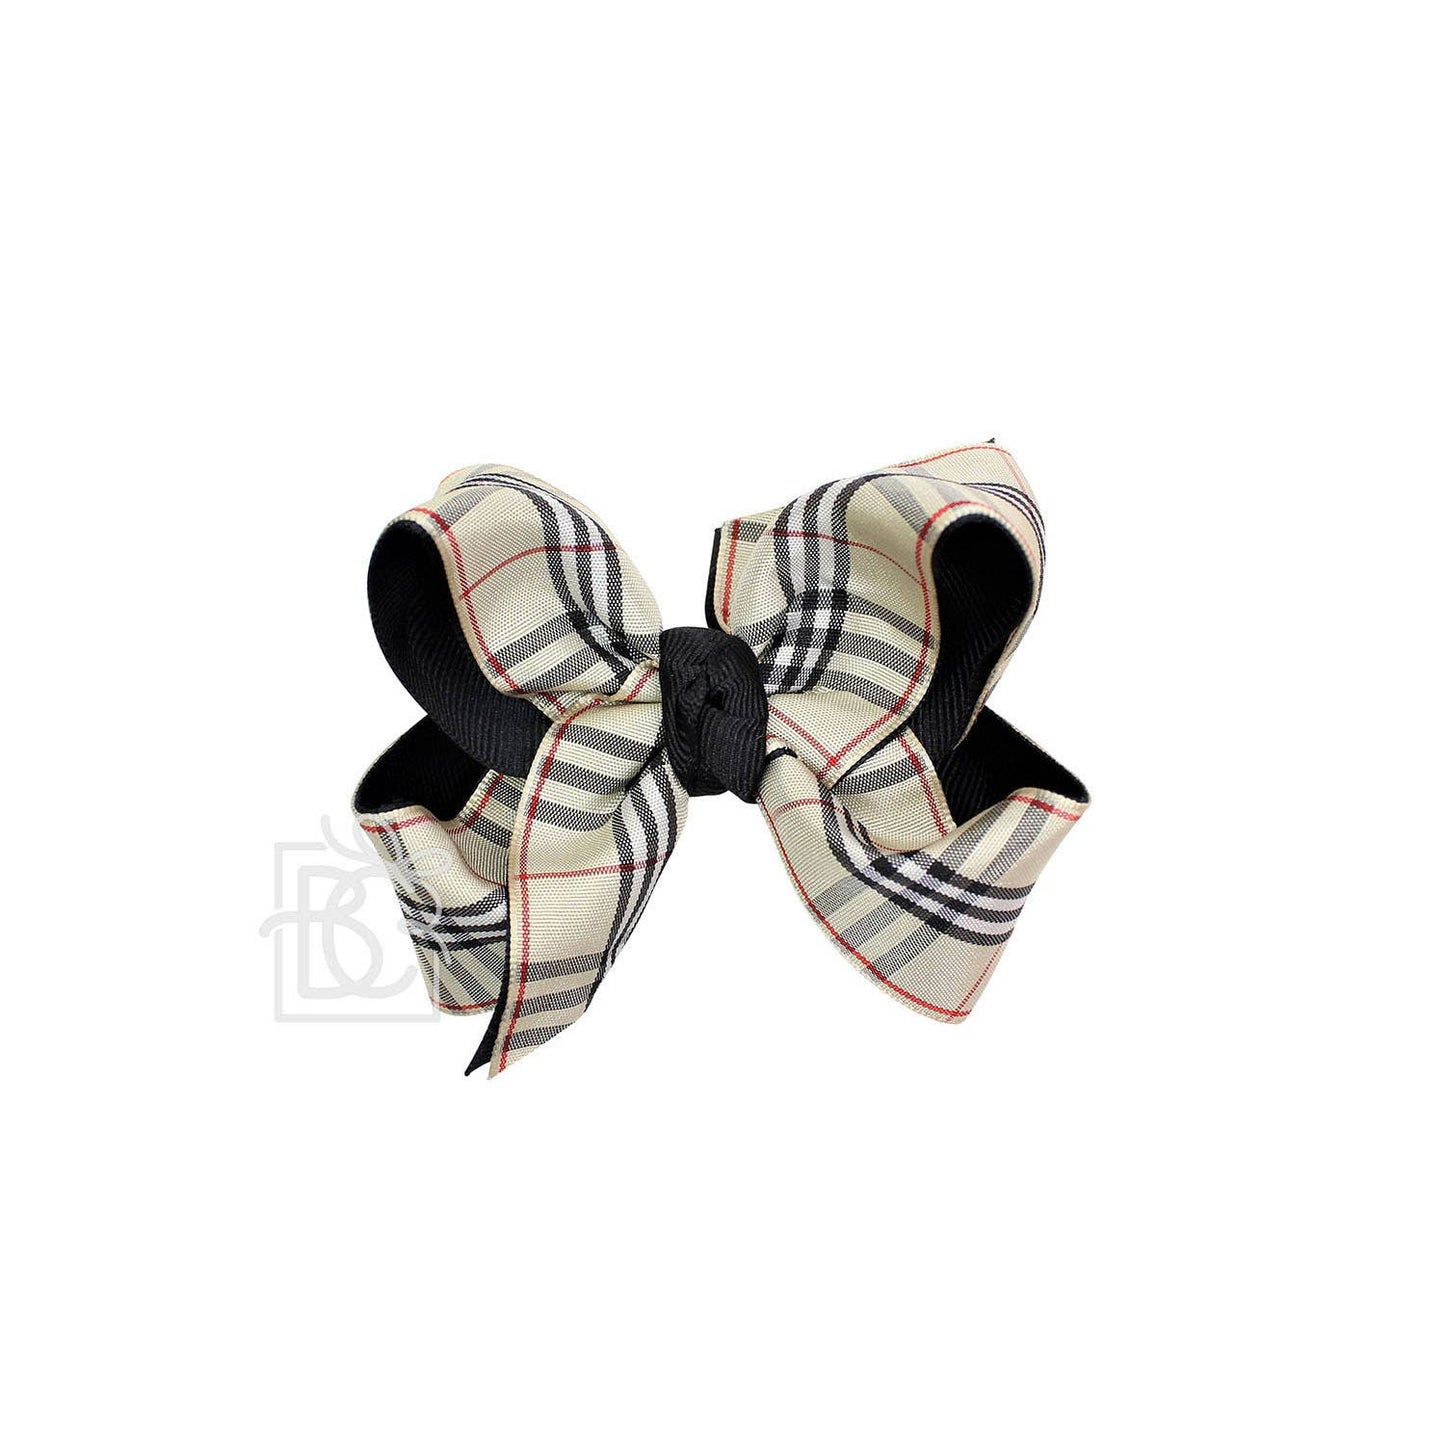 Layered Black/Tan Plaid Bow